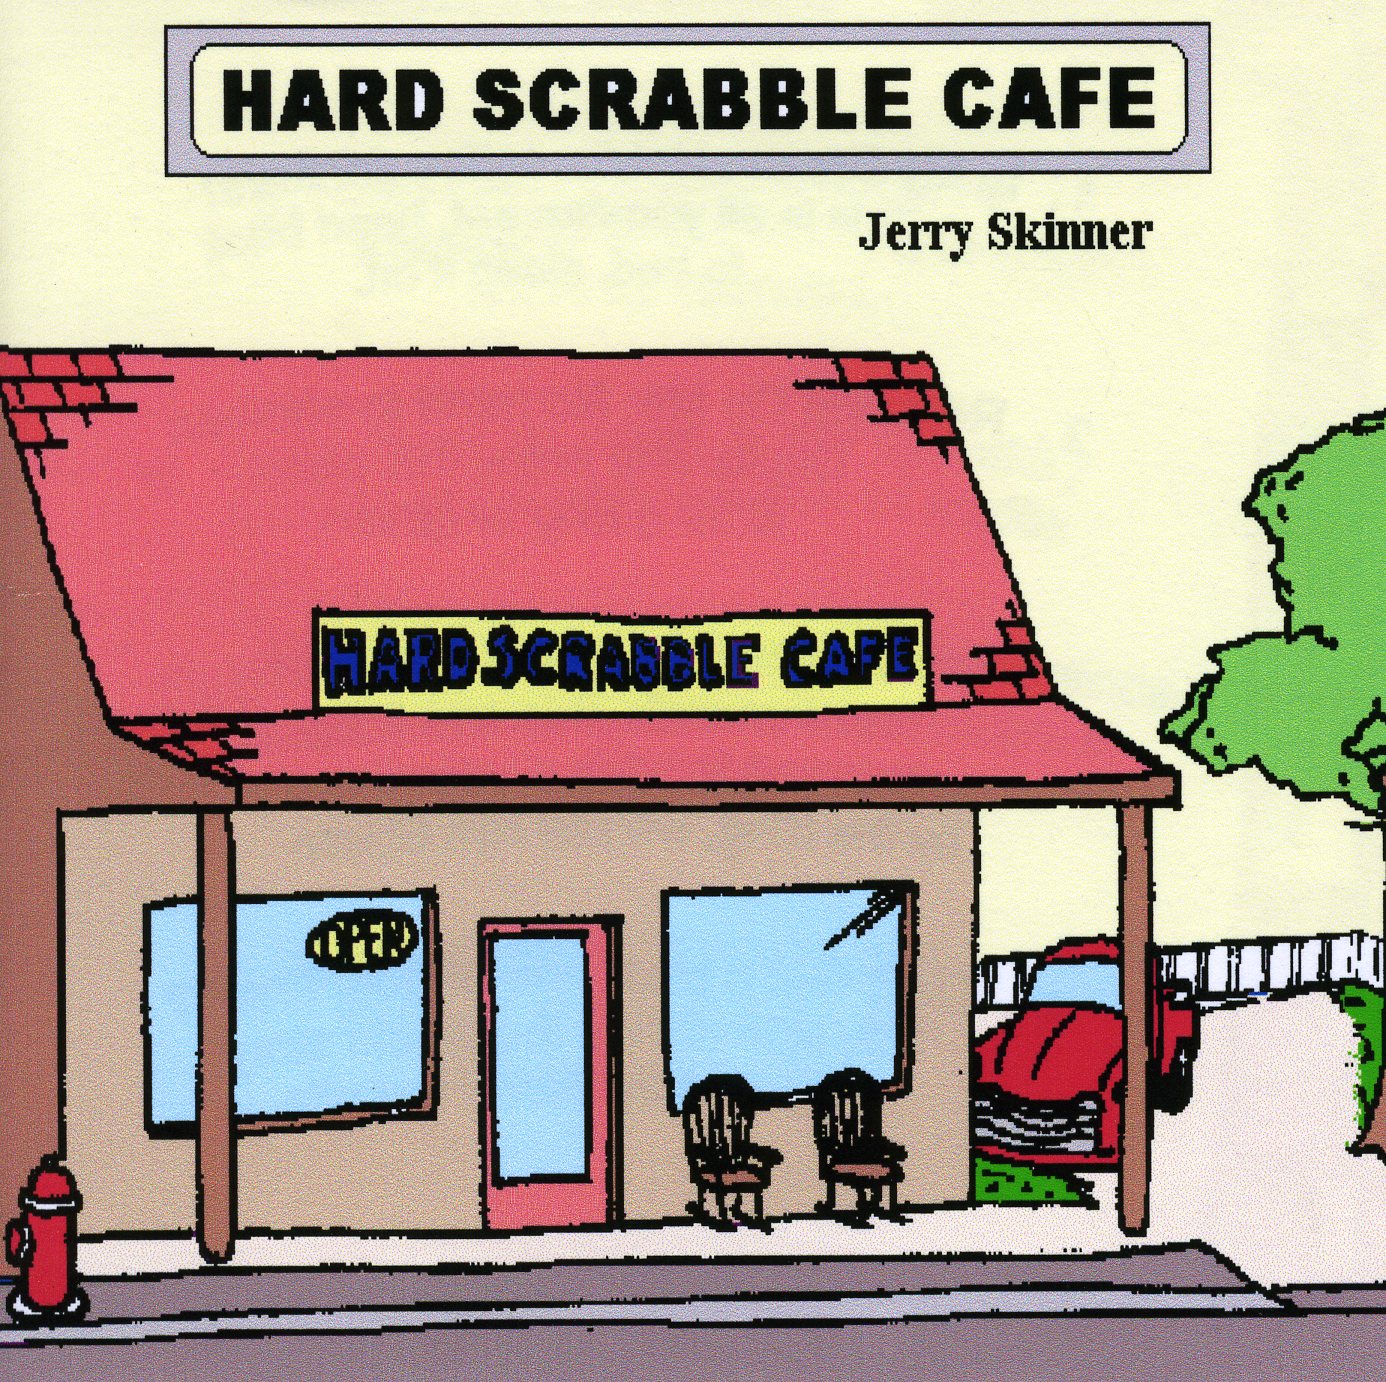 HARD SCRABBLE CAFE